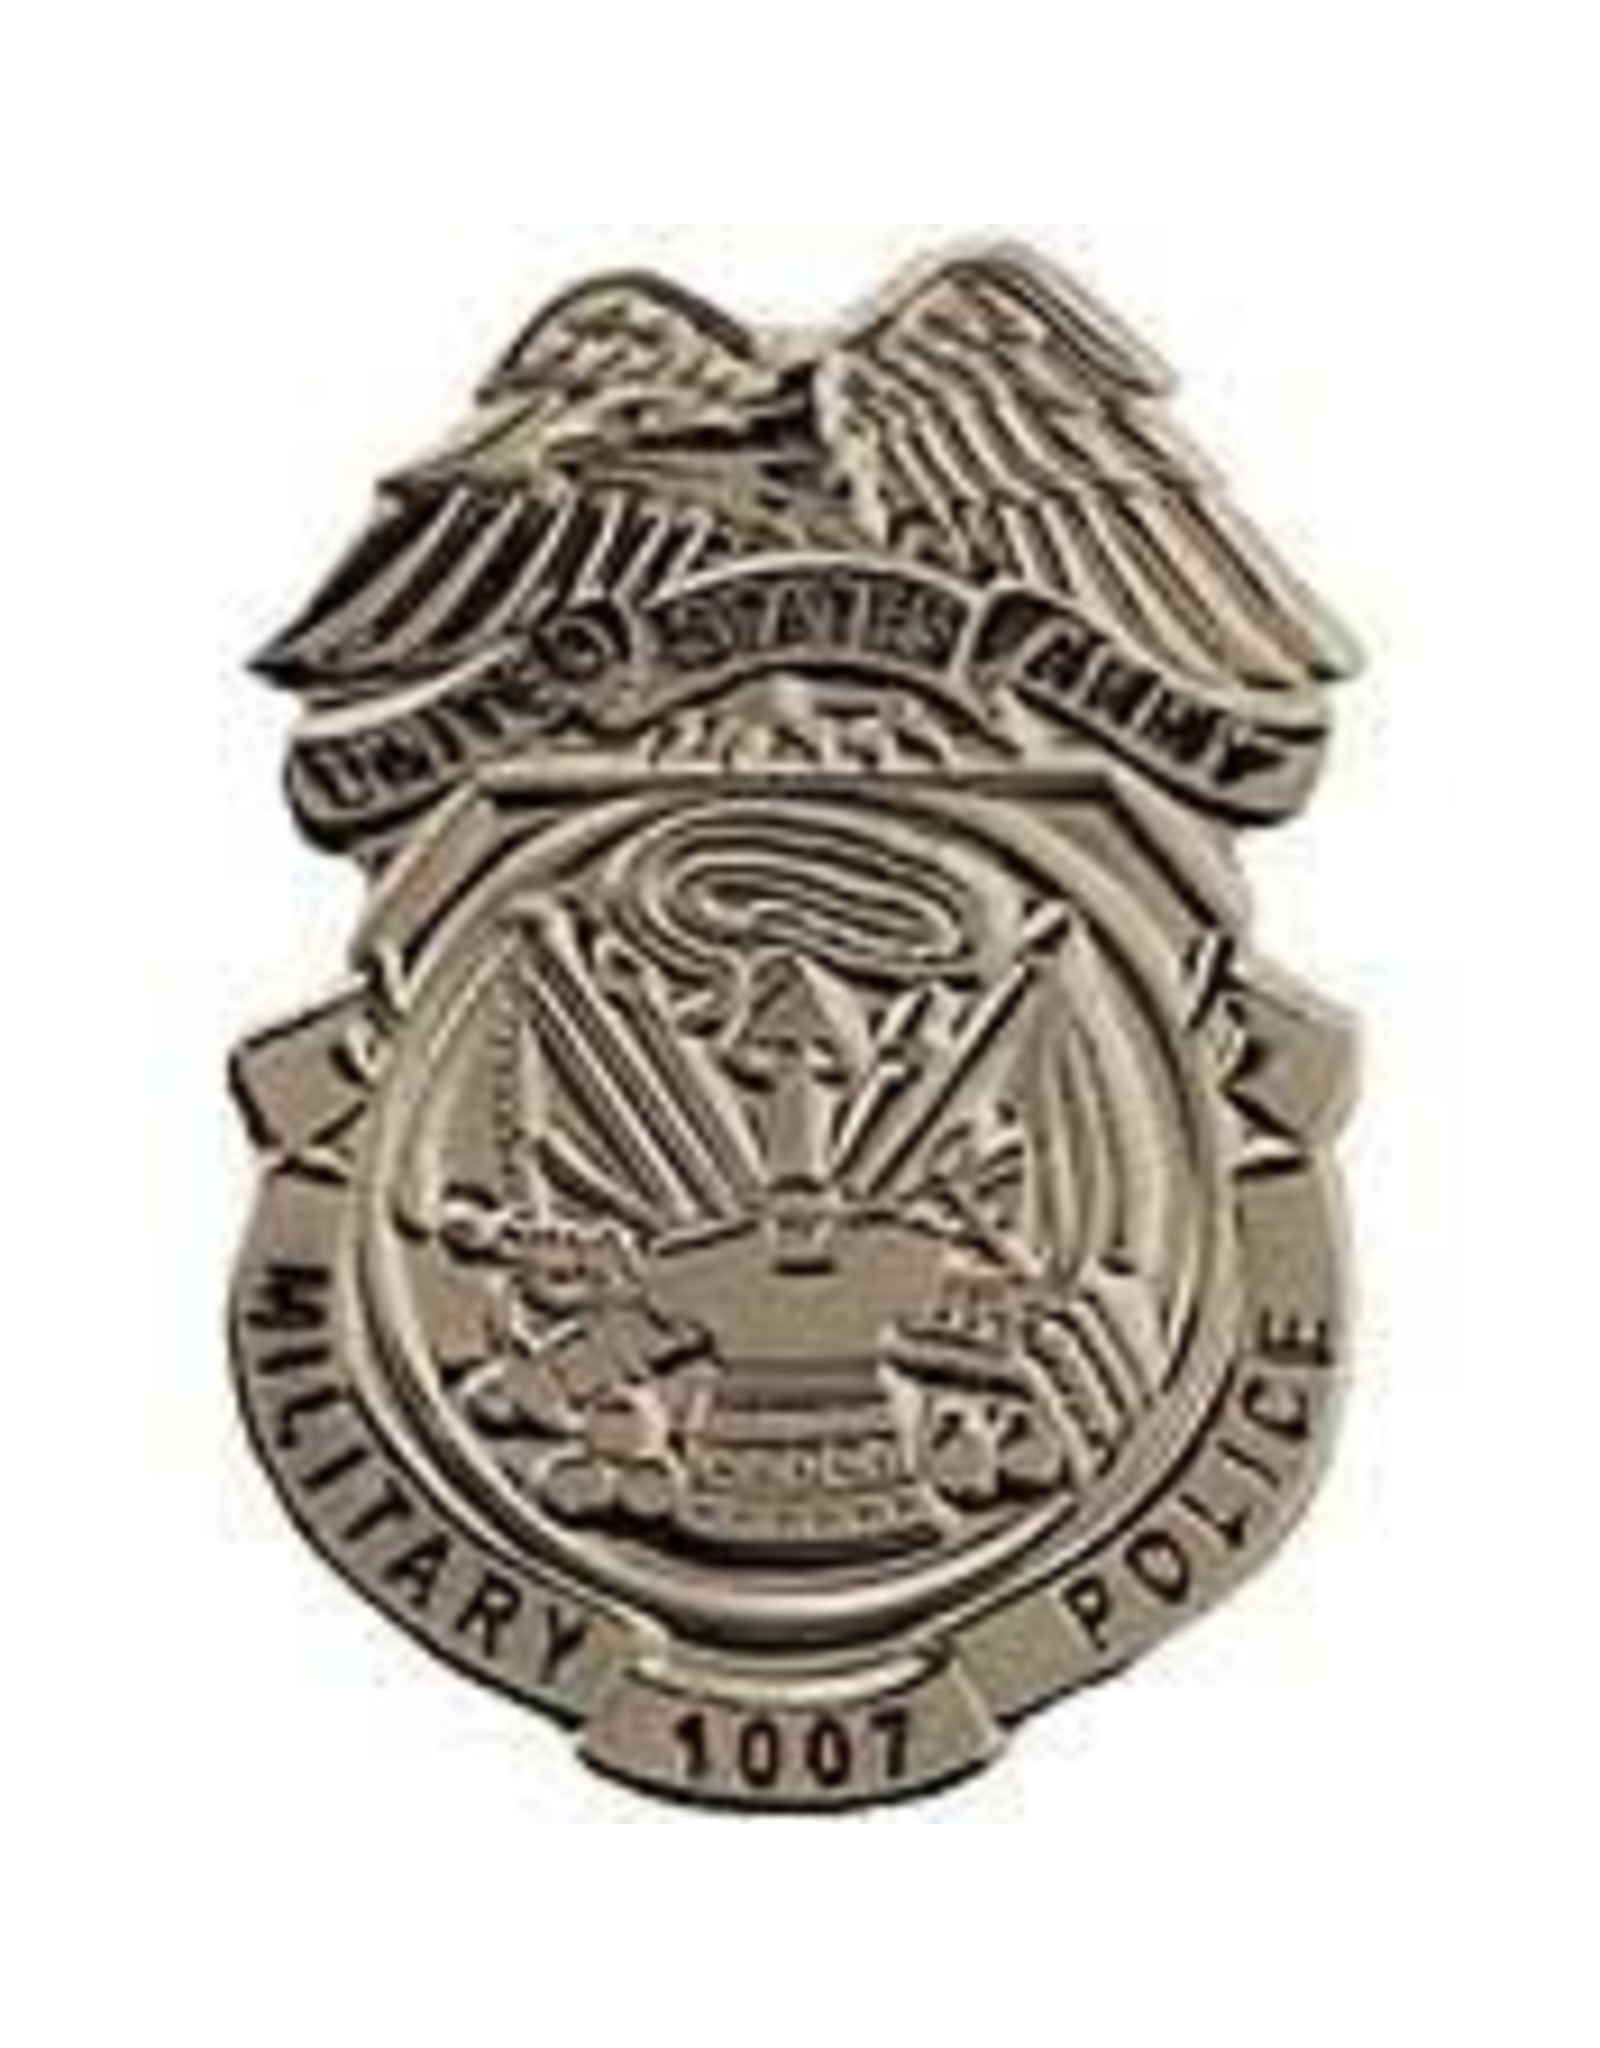 Pin - Mini Military Police Badge